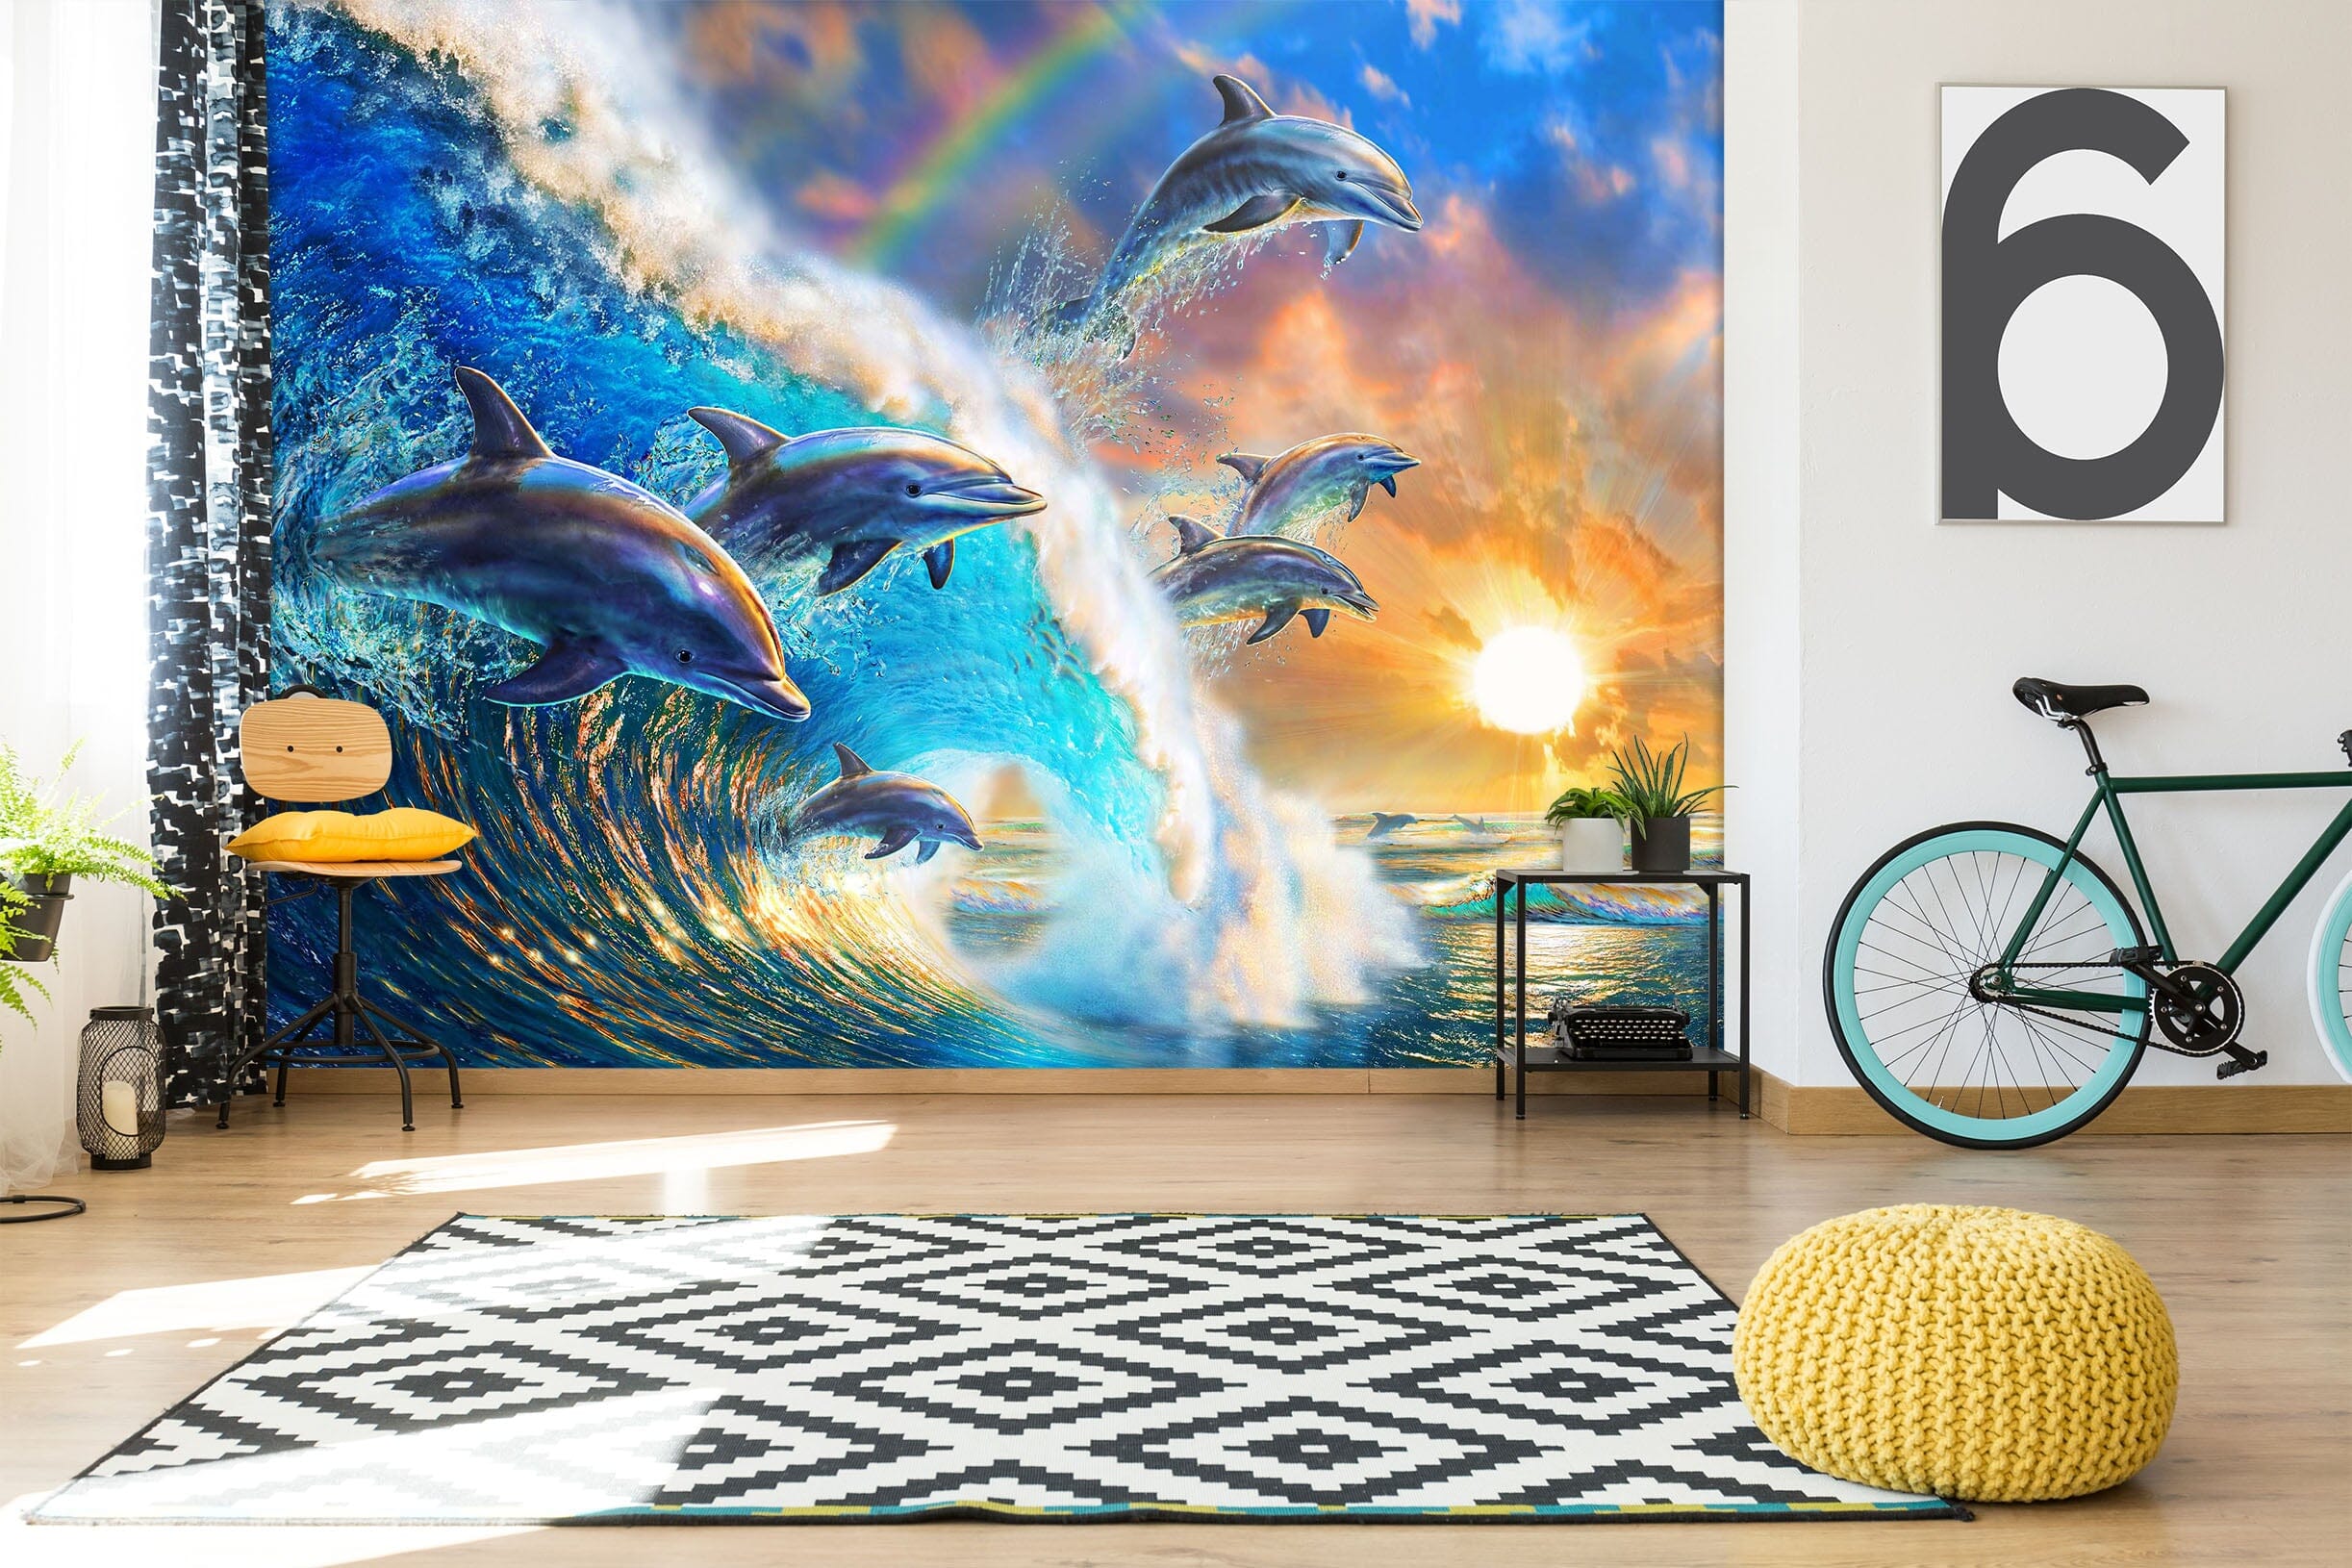 3D Dolphin Wave 1416 Adrian Chesterman Wall Mural Wall Murals Wallpaper AJ Wallpaper 2 